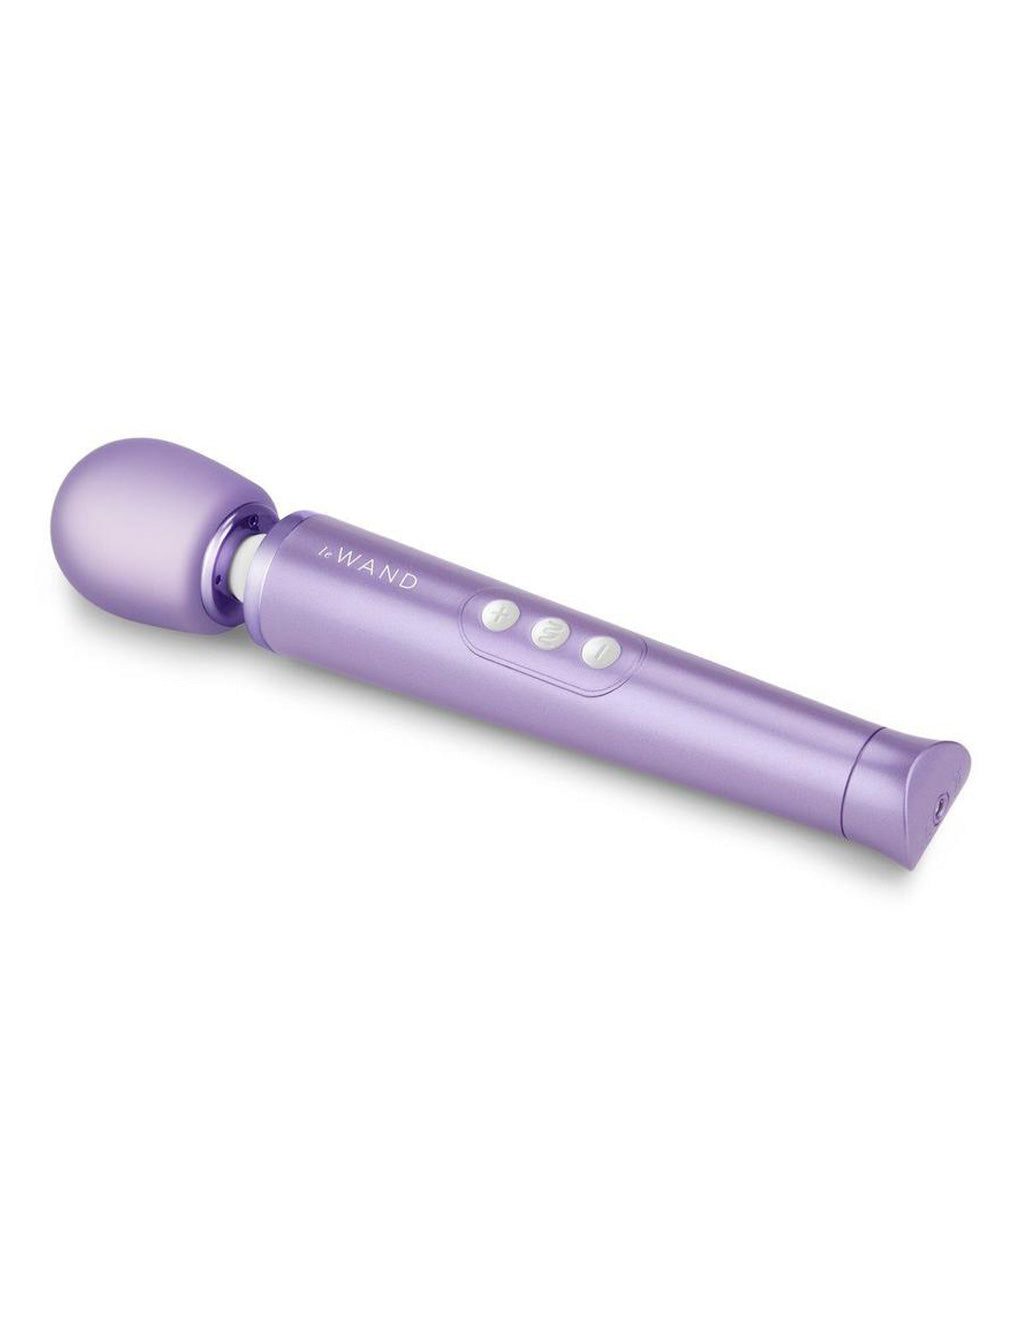 Le Wand Petite Rechargeable Massager Purple Side